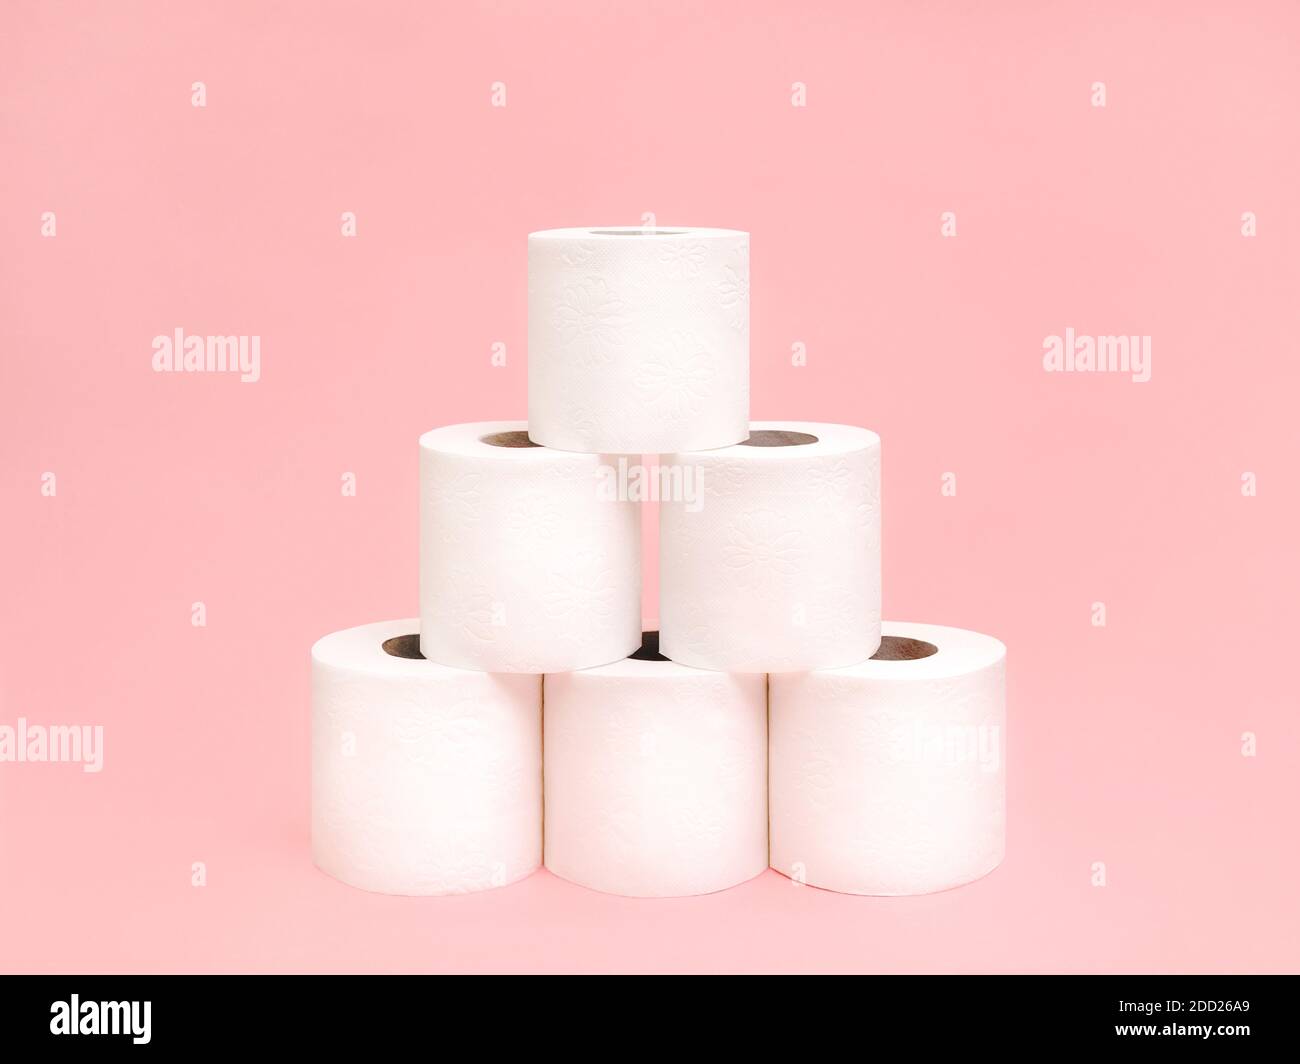 https://c8.alamy.com/compes/2dd26a9/pila-de-papel-higienico-foto-en-estilo-minimo-cinco-rollos-de-papel-higienico-blanco-sobre-fondo-rosa-claro-2dd26a9.jpg